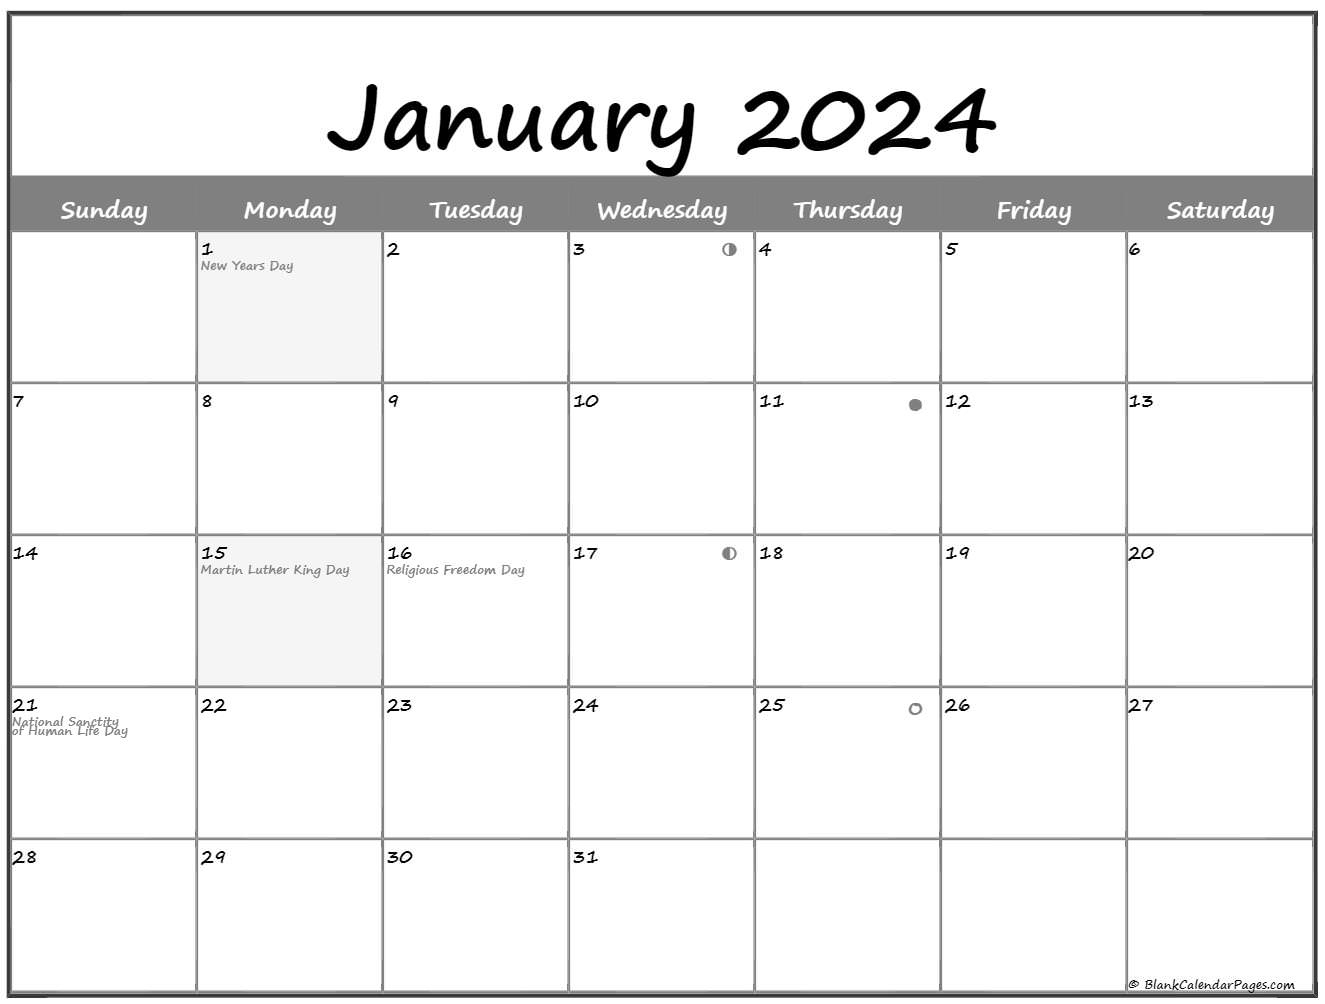 January 2024 Calendar Free Printable Calendar January 2024 Calendar - Free Printable 2024 January Calendar With Holidays